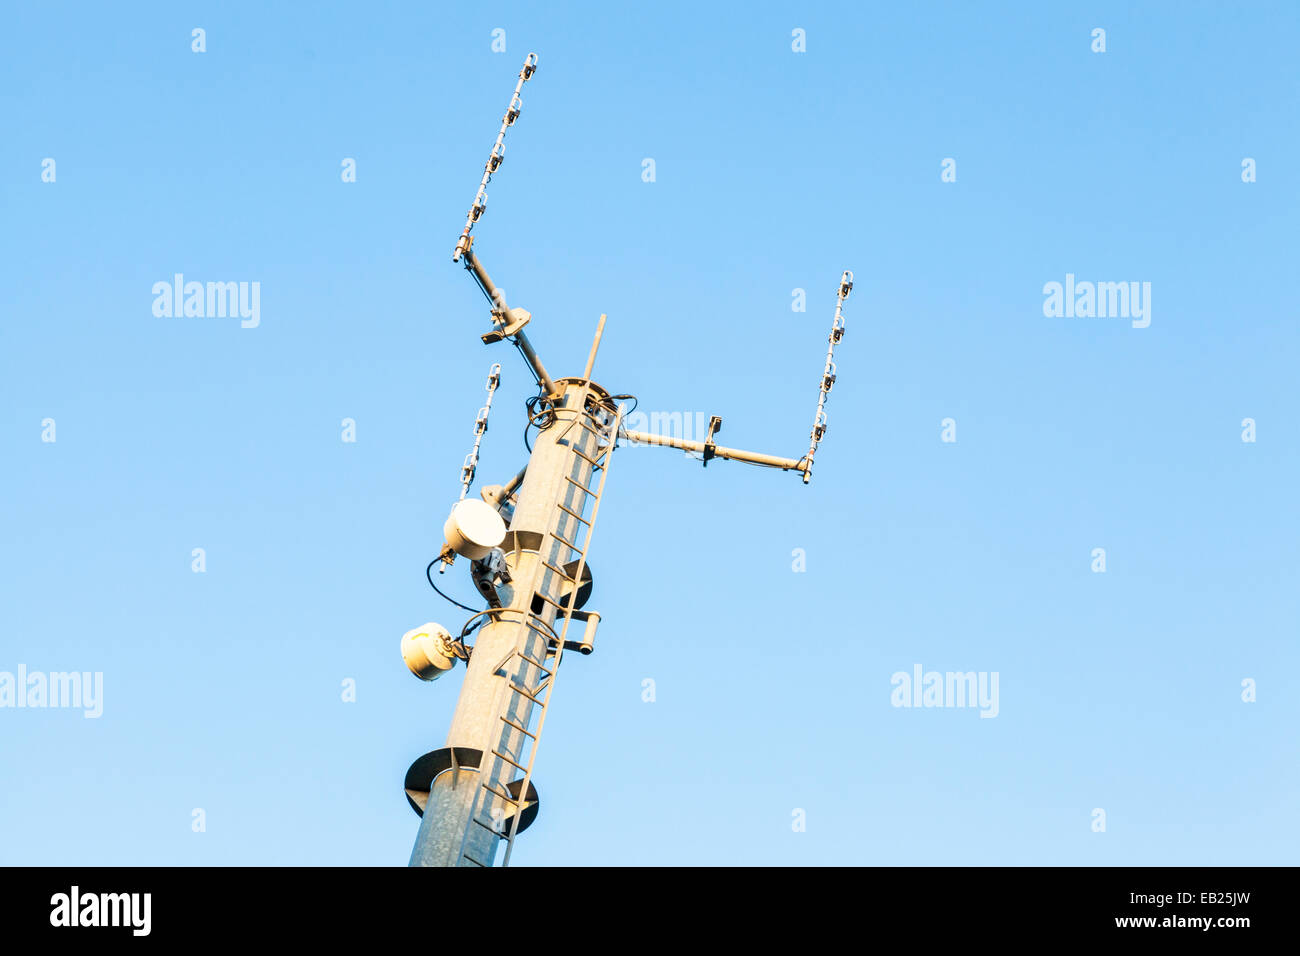 La parte superior de un mástil de telecomunicaciones autoportantes, Nottinghamshire, Inglaterra, Reino Unido. Foto de stock